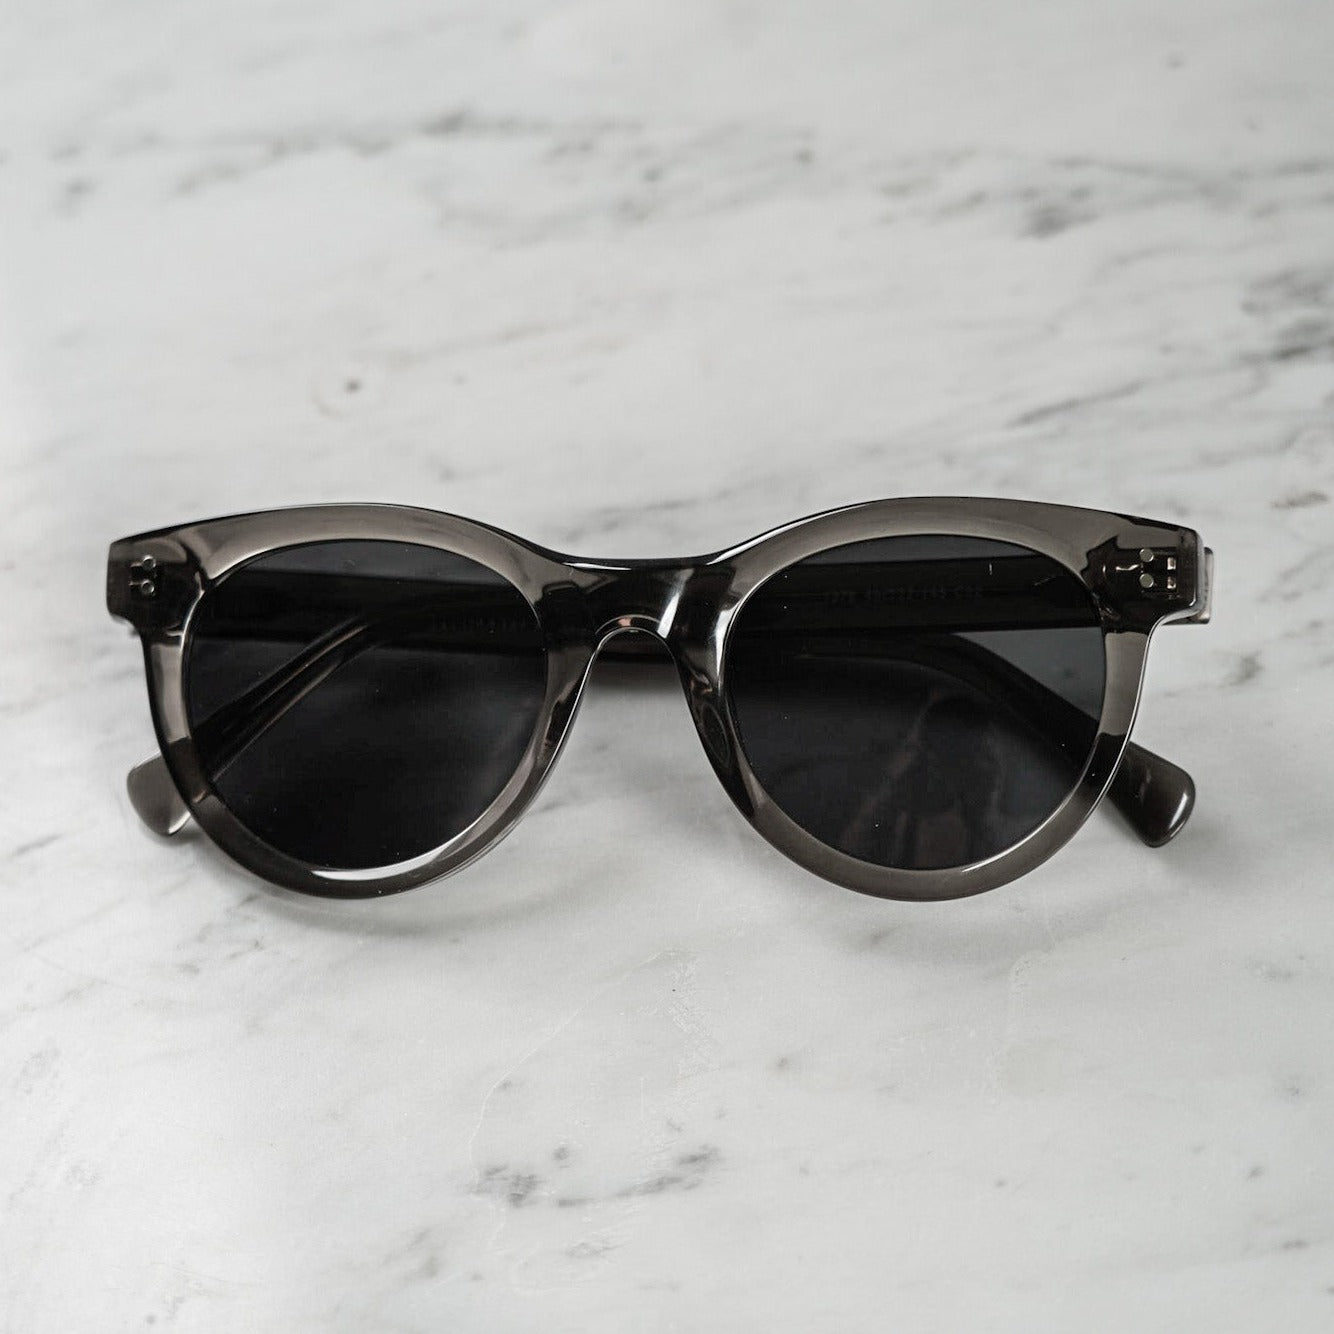 Classic solbriller - Transparent grey